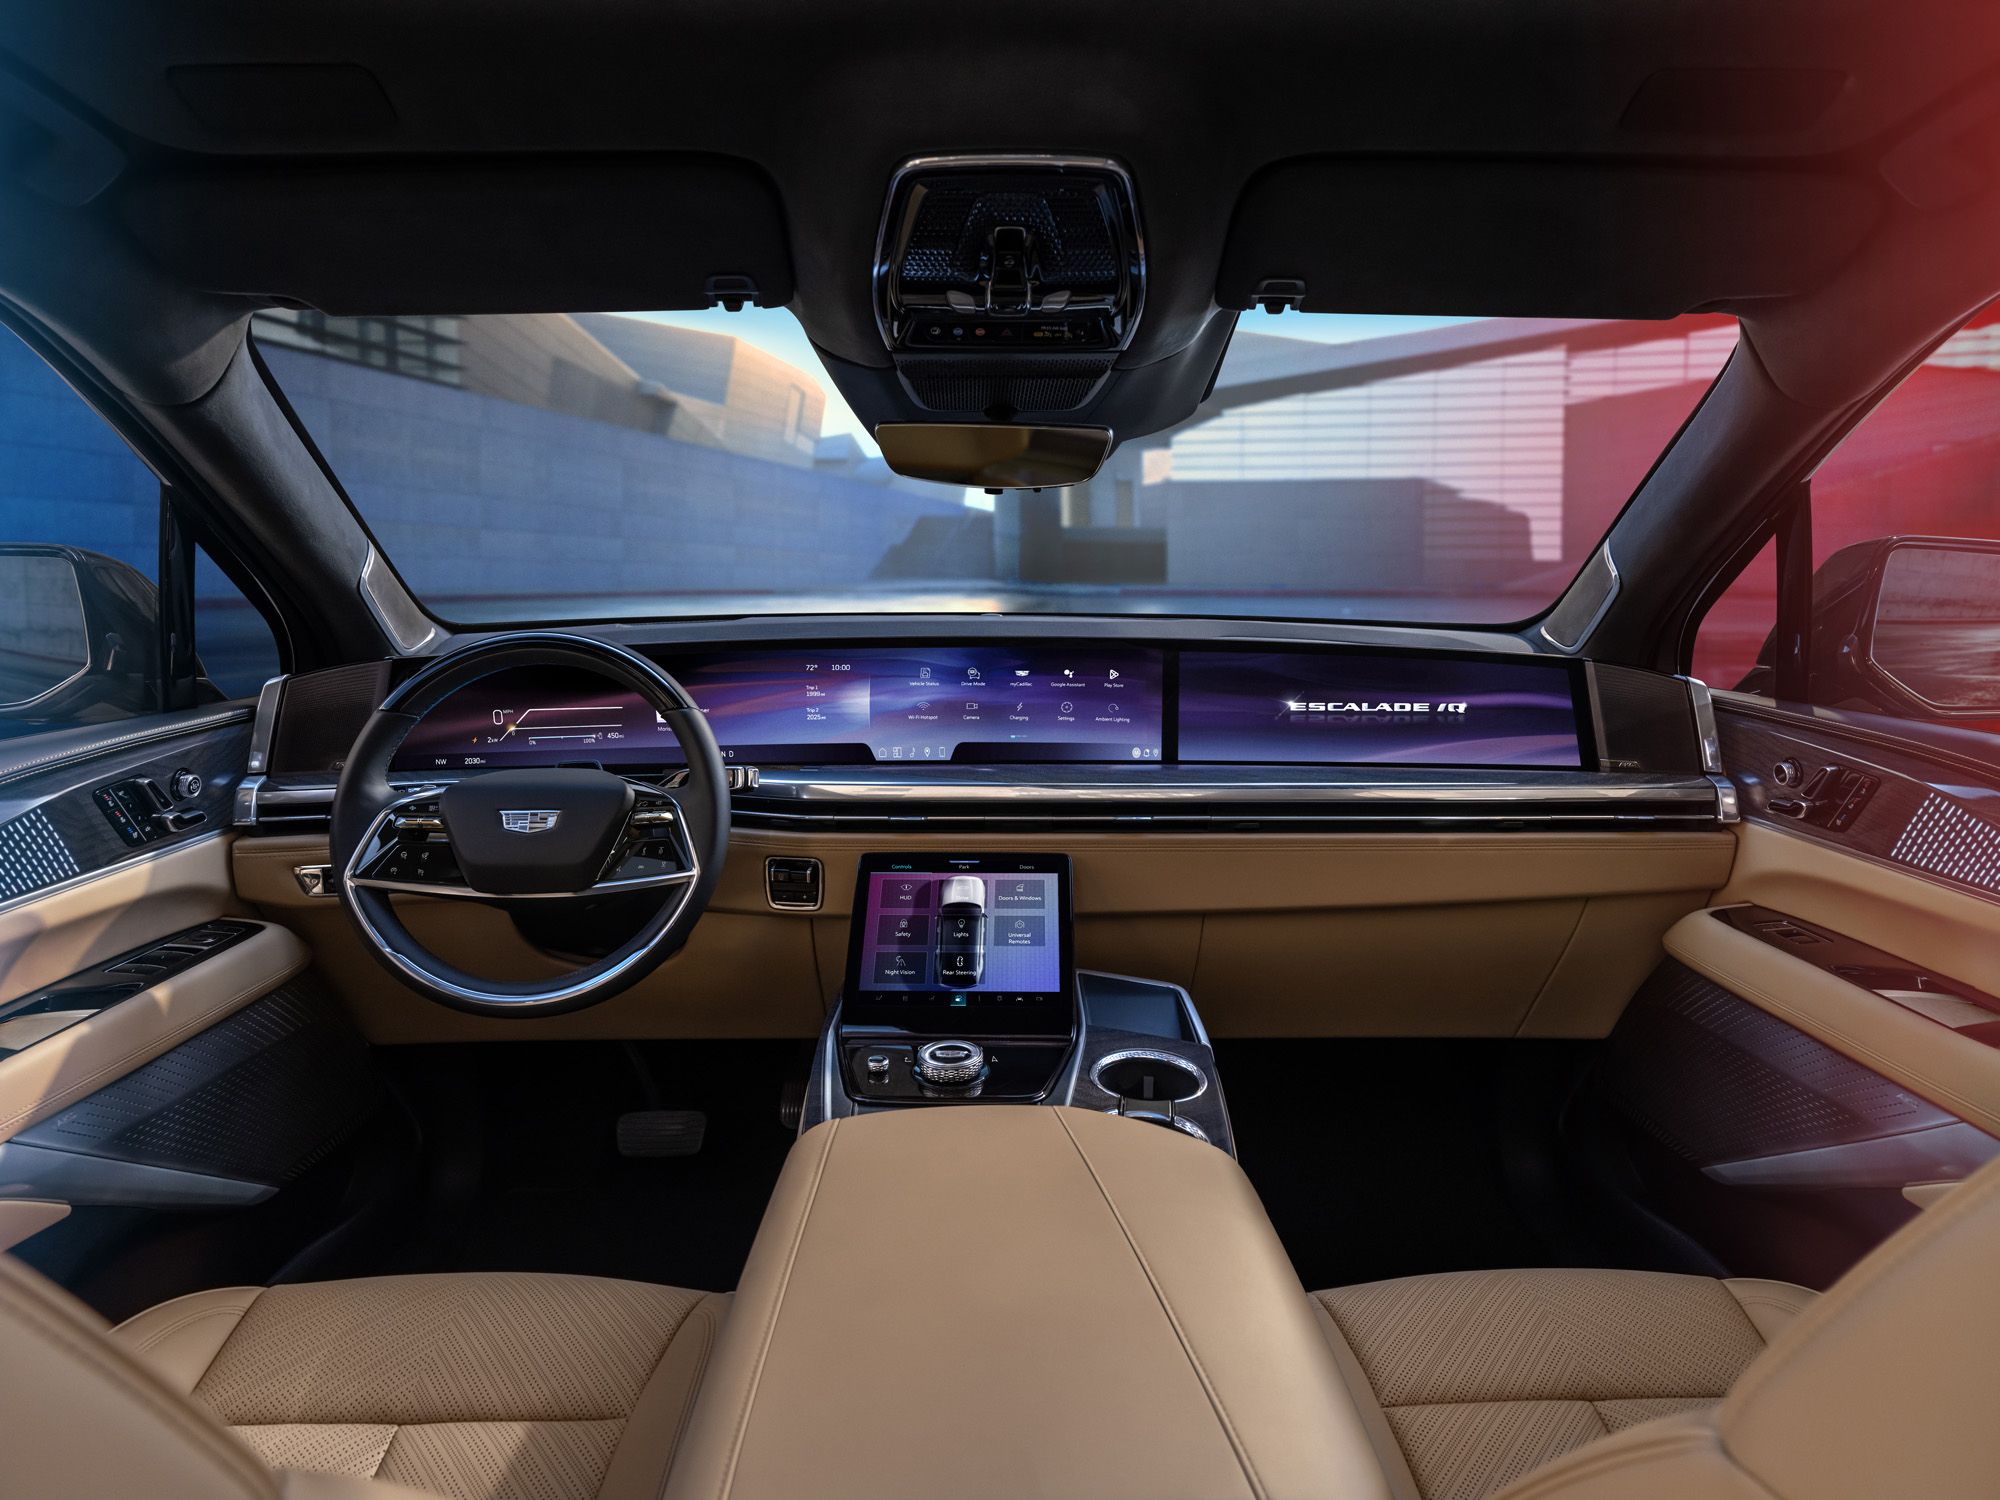 2016 Cadillac Escalade: 96 Interior Photos | U.S. News